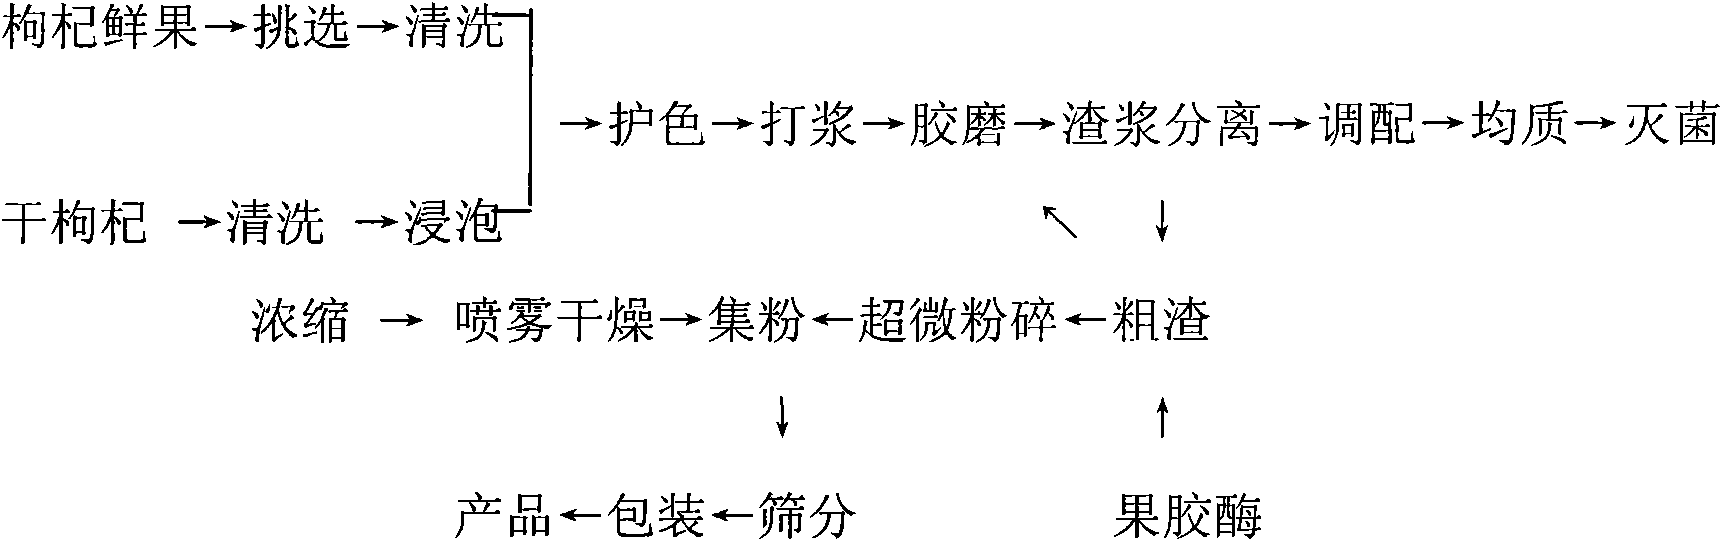 Preparation method of Chinese wolfberry powder